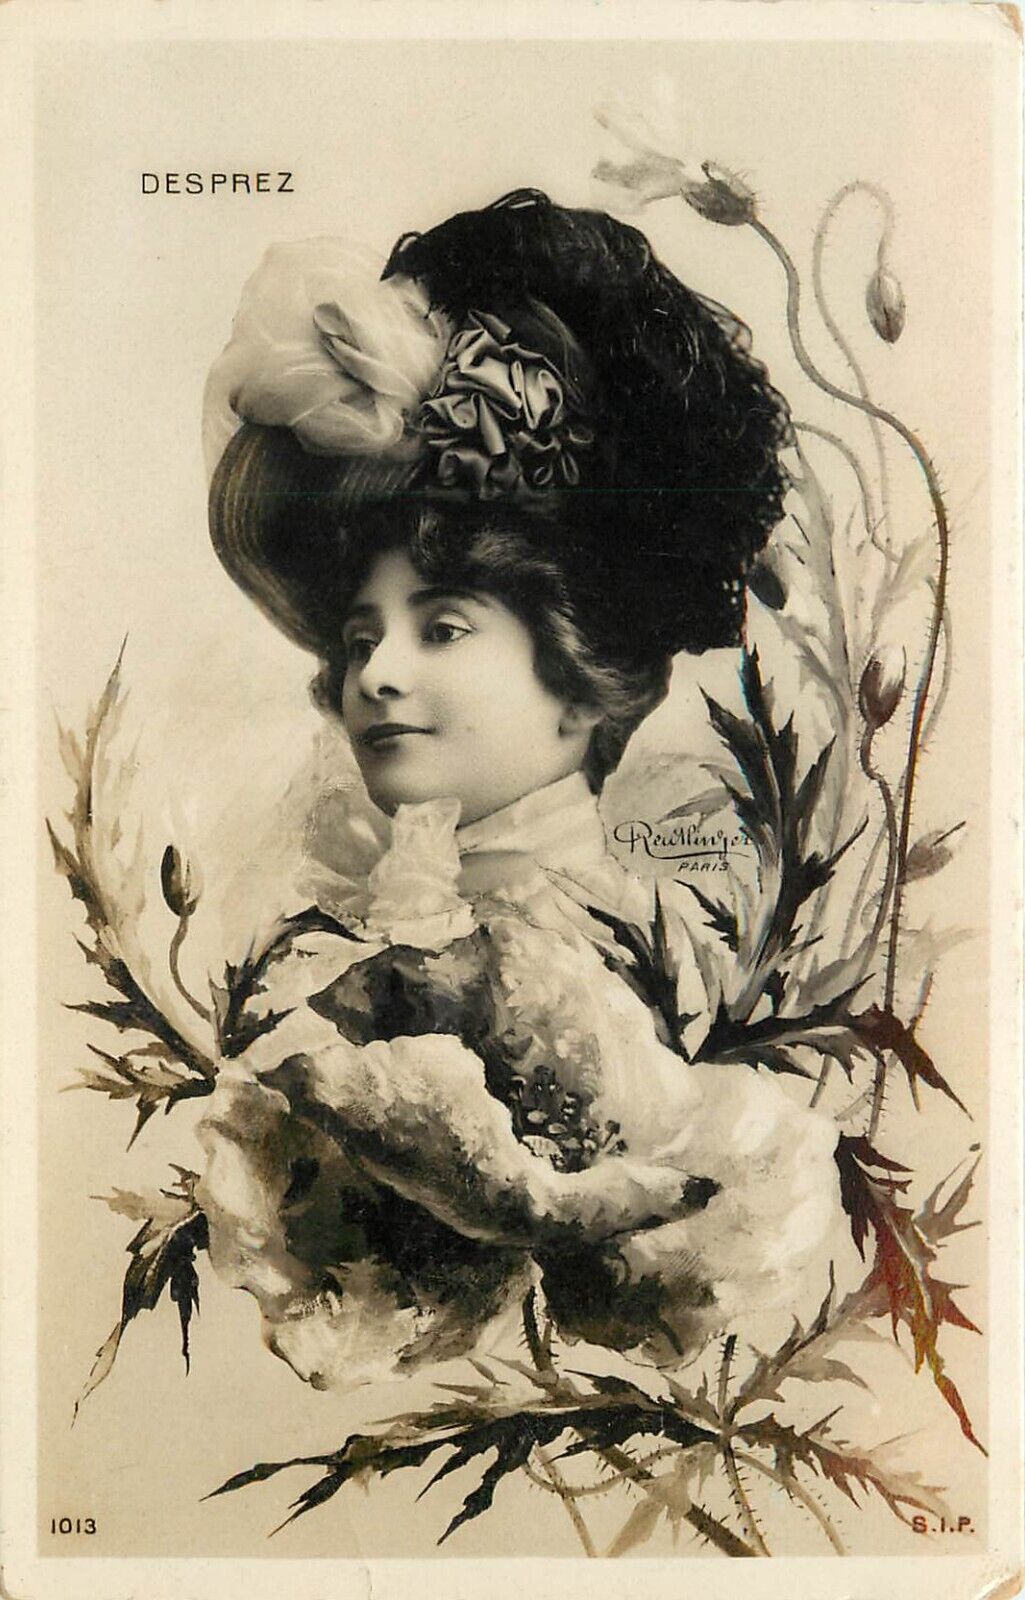 Reutlinger Paris RPPC 1013 French Actress Rene Desprez, Huge Hat, Poppy Vignette